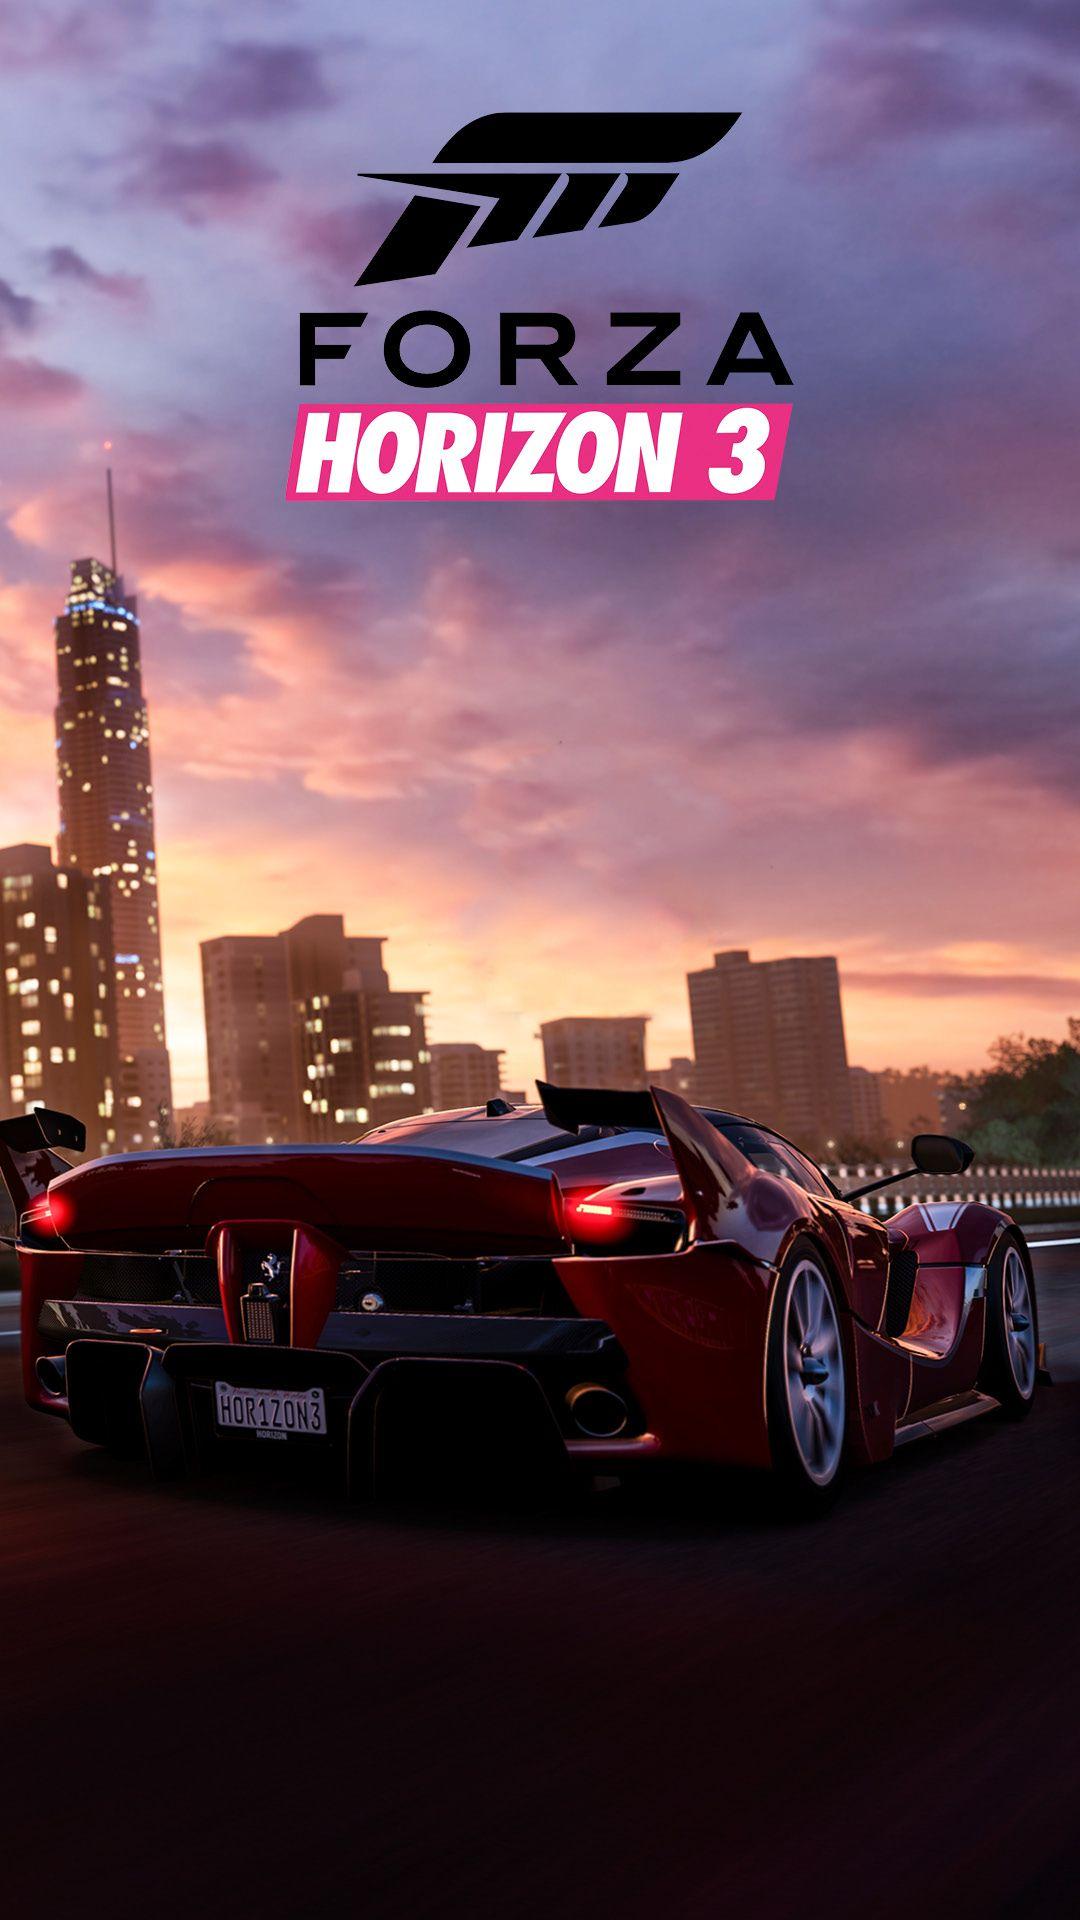 1920x1080 Forza Horizon 3 Wallpaper Download For P by KAFATSE on DeviantArt